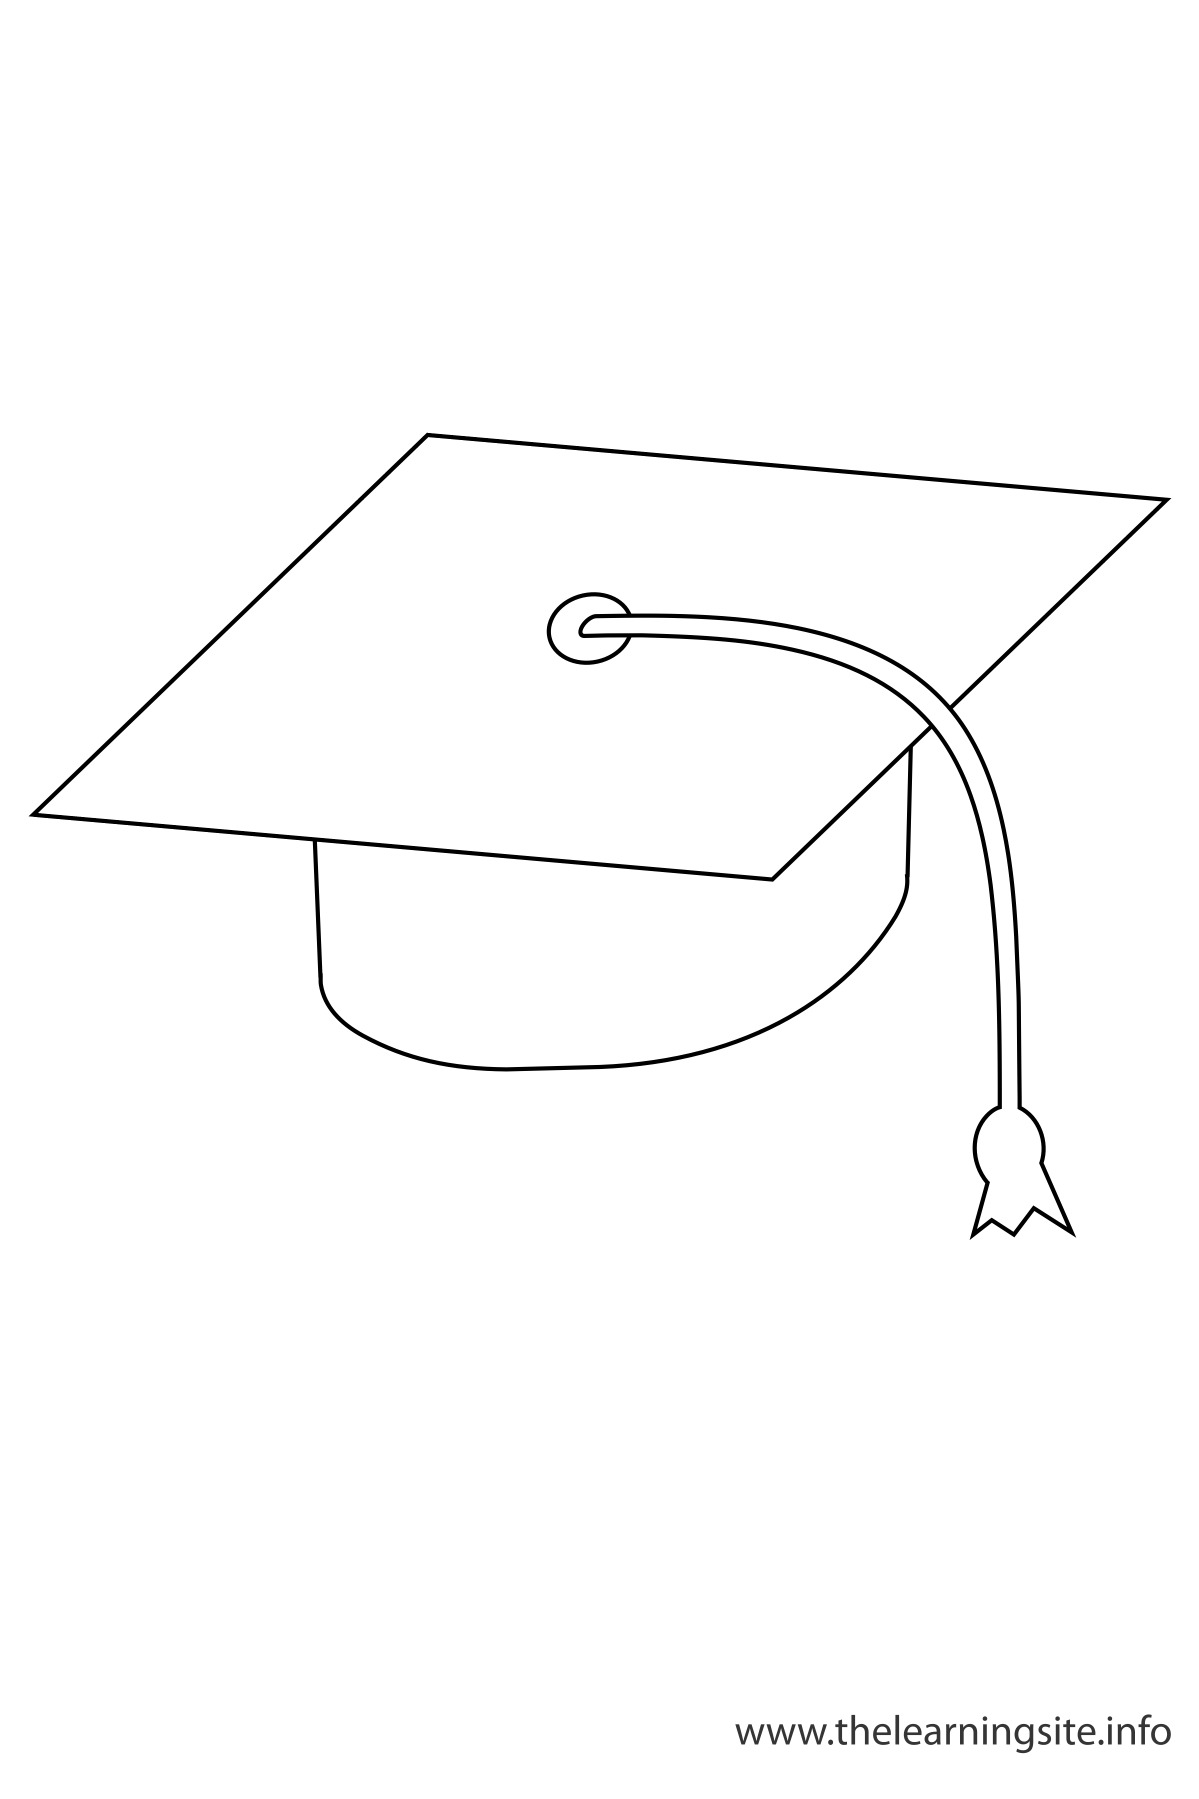 free graduation cap clipart black and white - photo #50